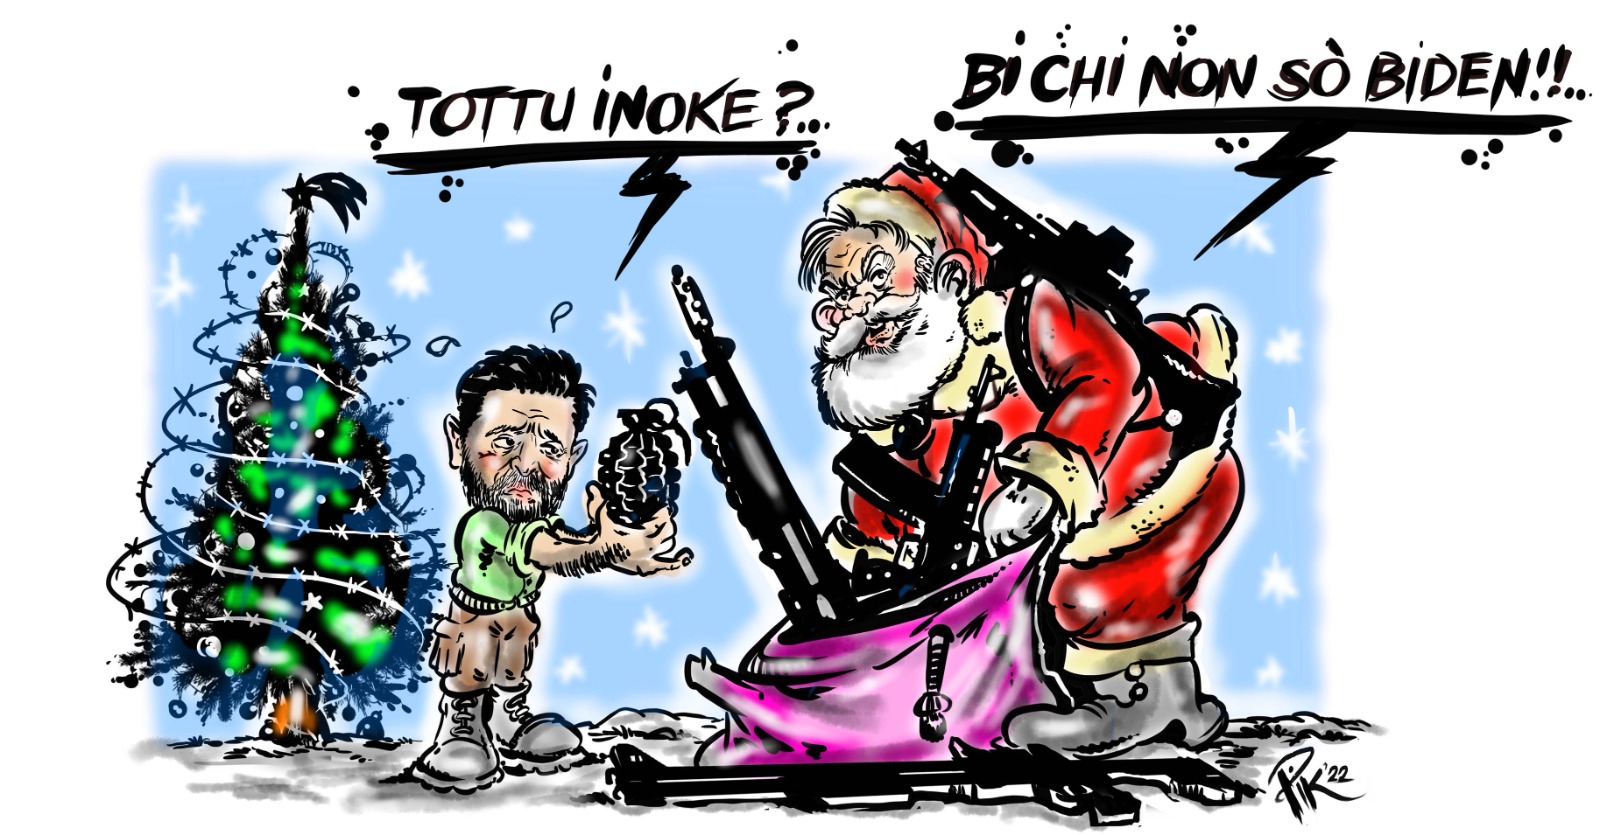 Guerra in Ucraina: arriva il Natale